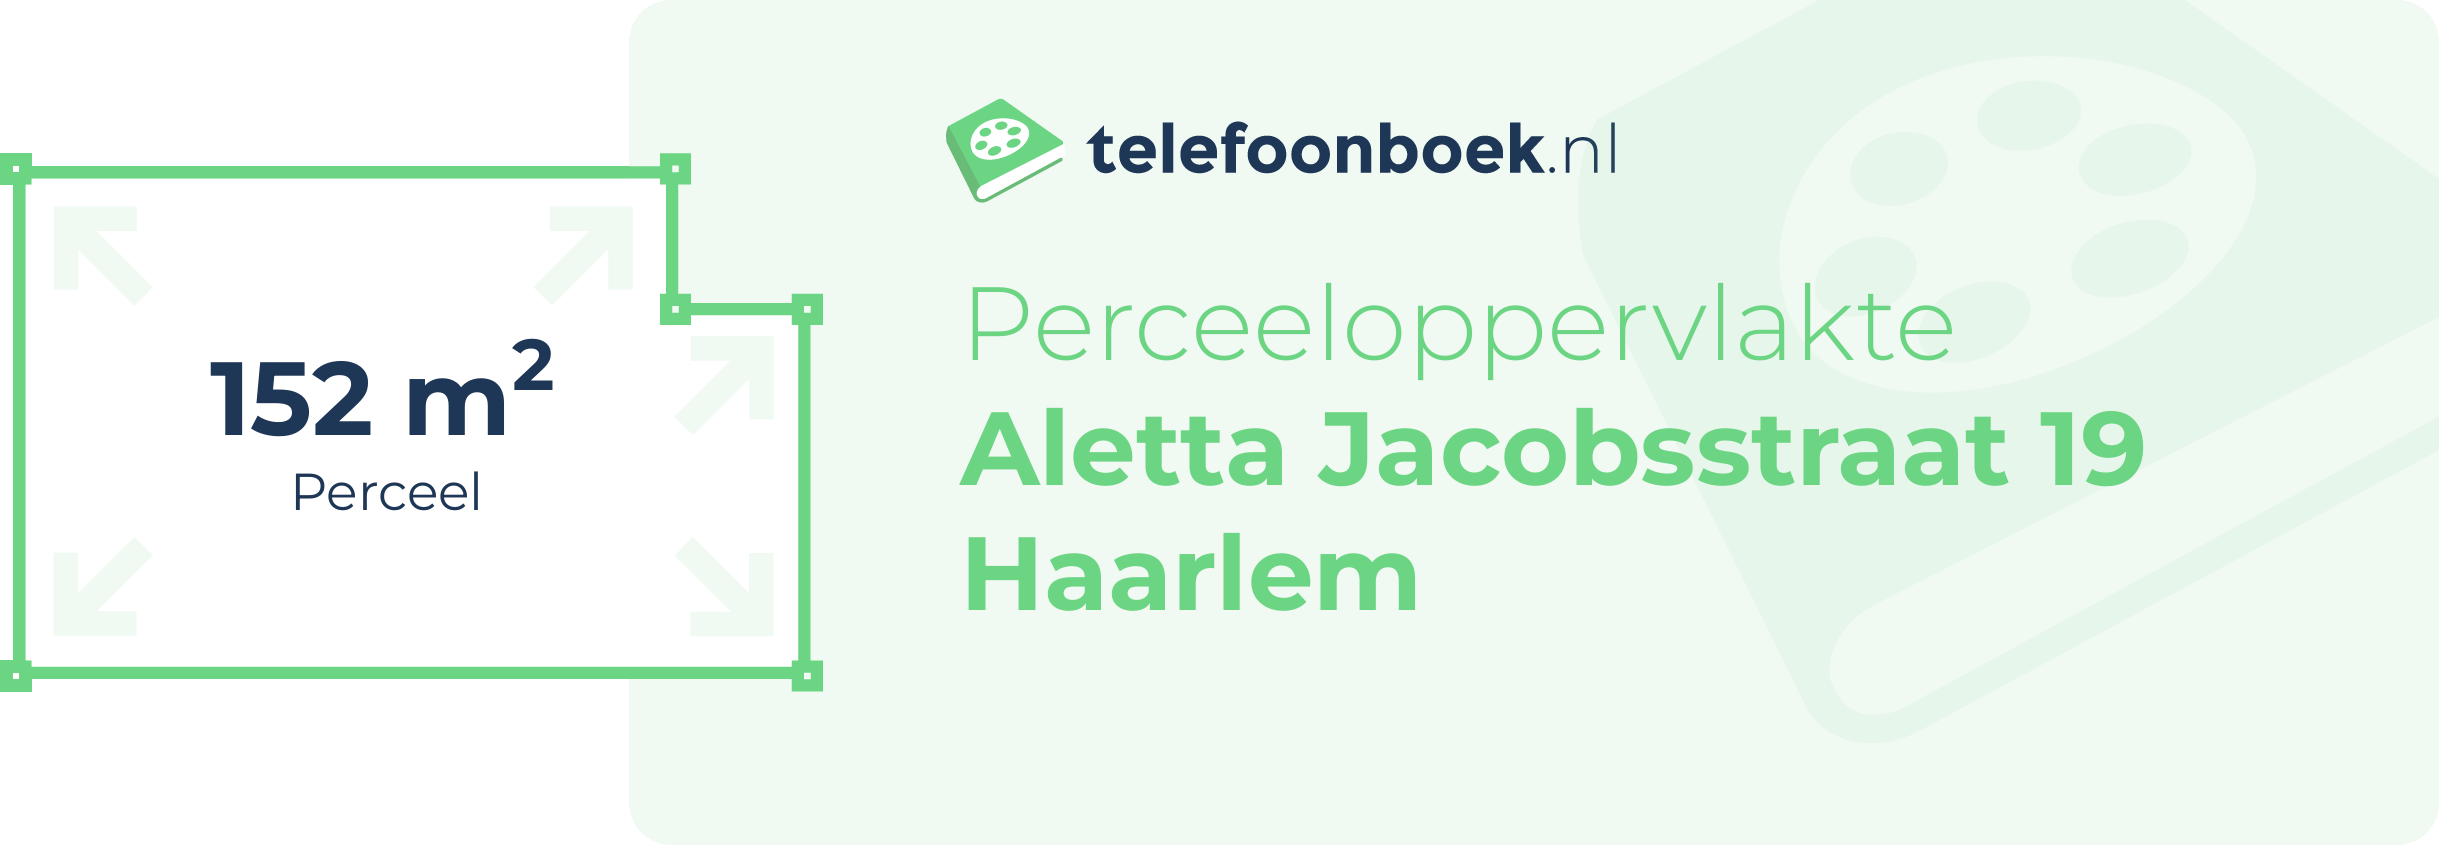 Perceeloppervlakte Aletta Jacobsstraat 19 Haarlem